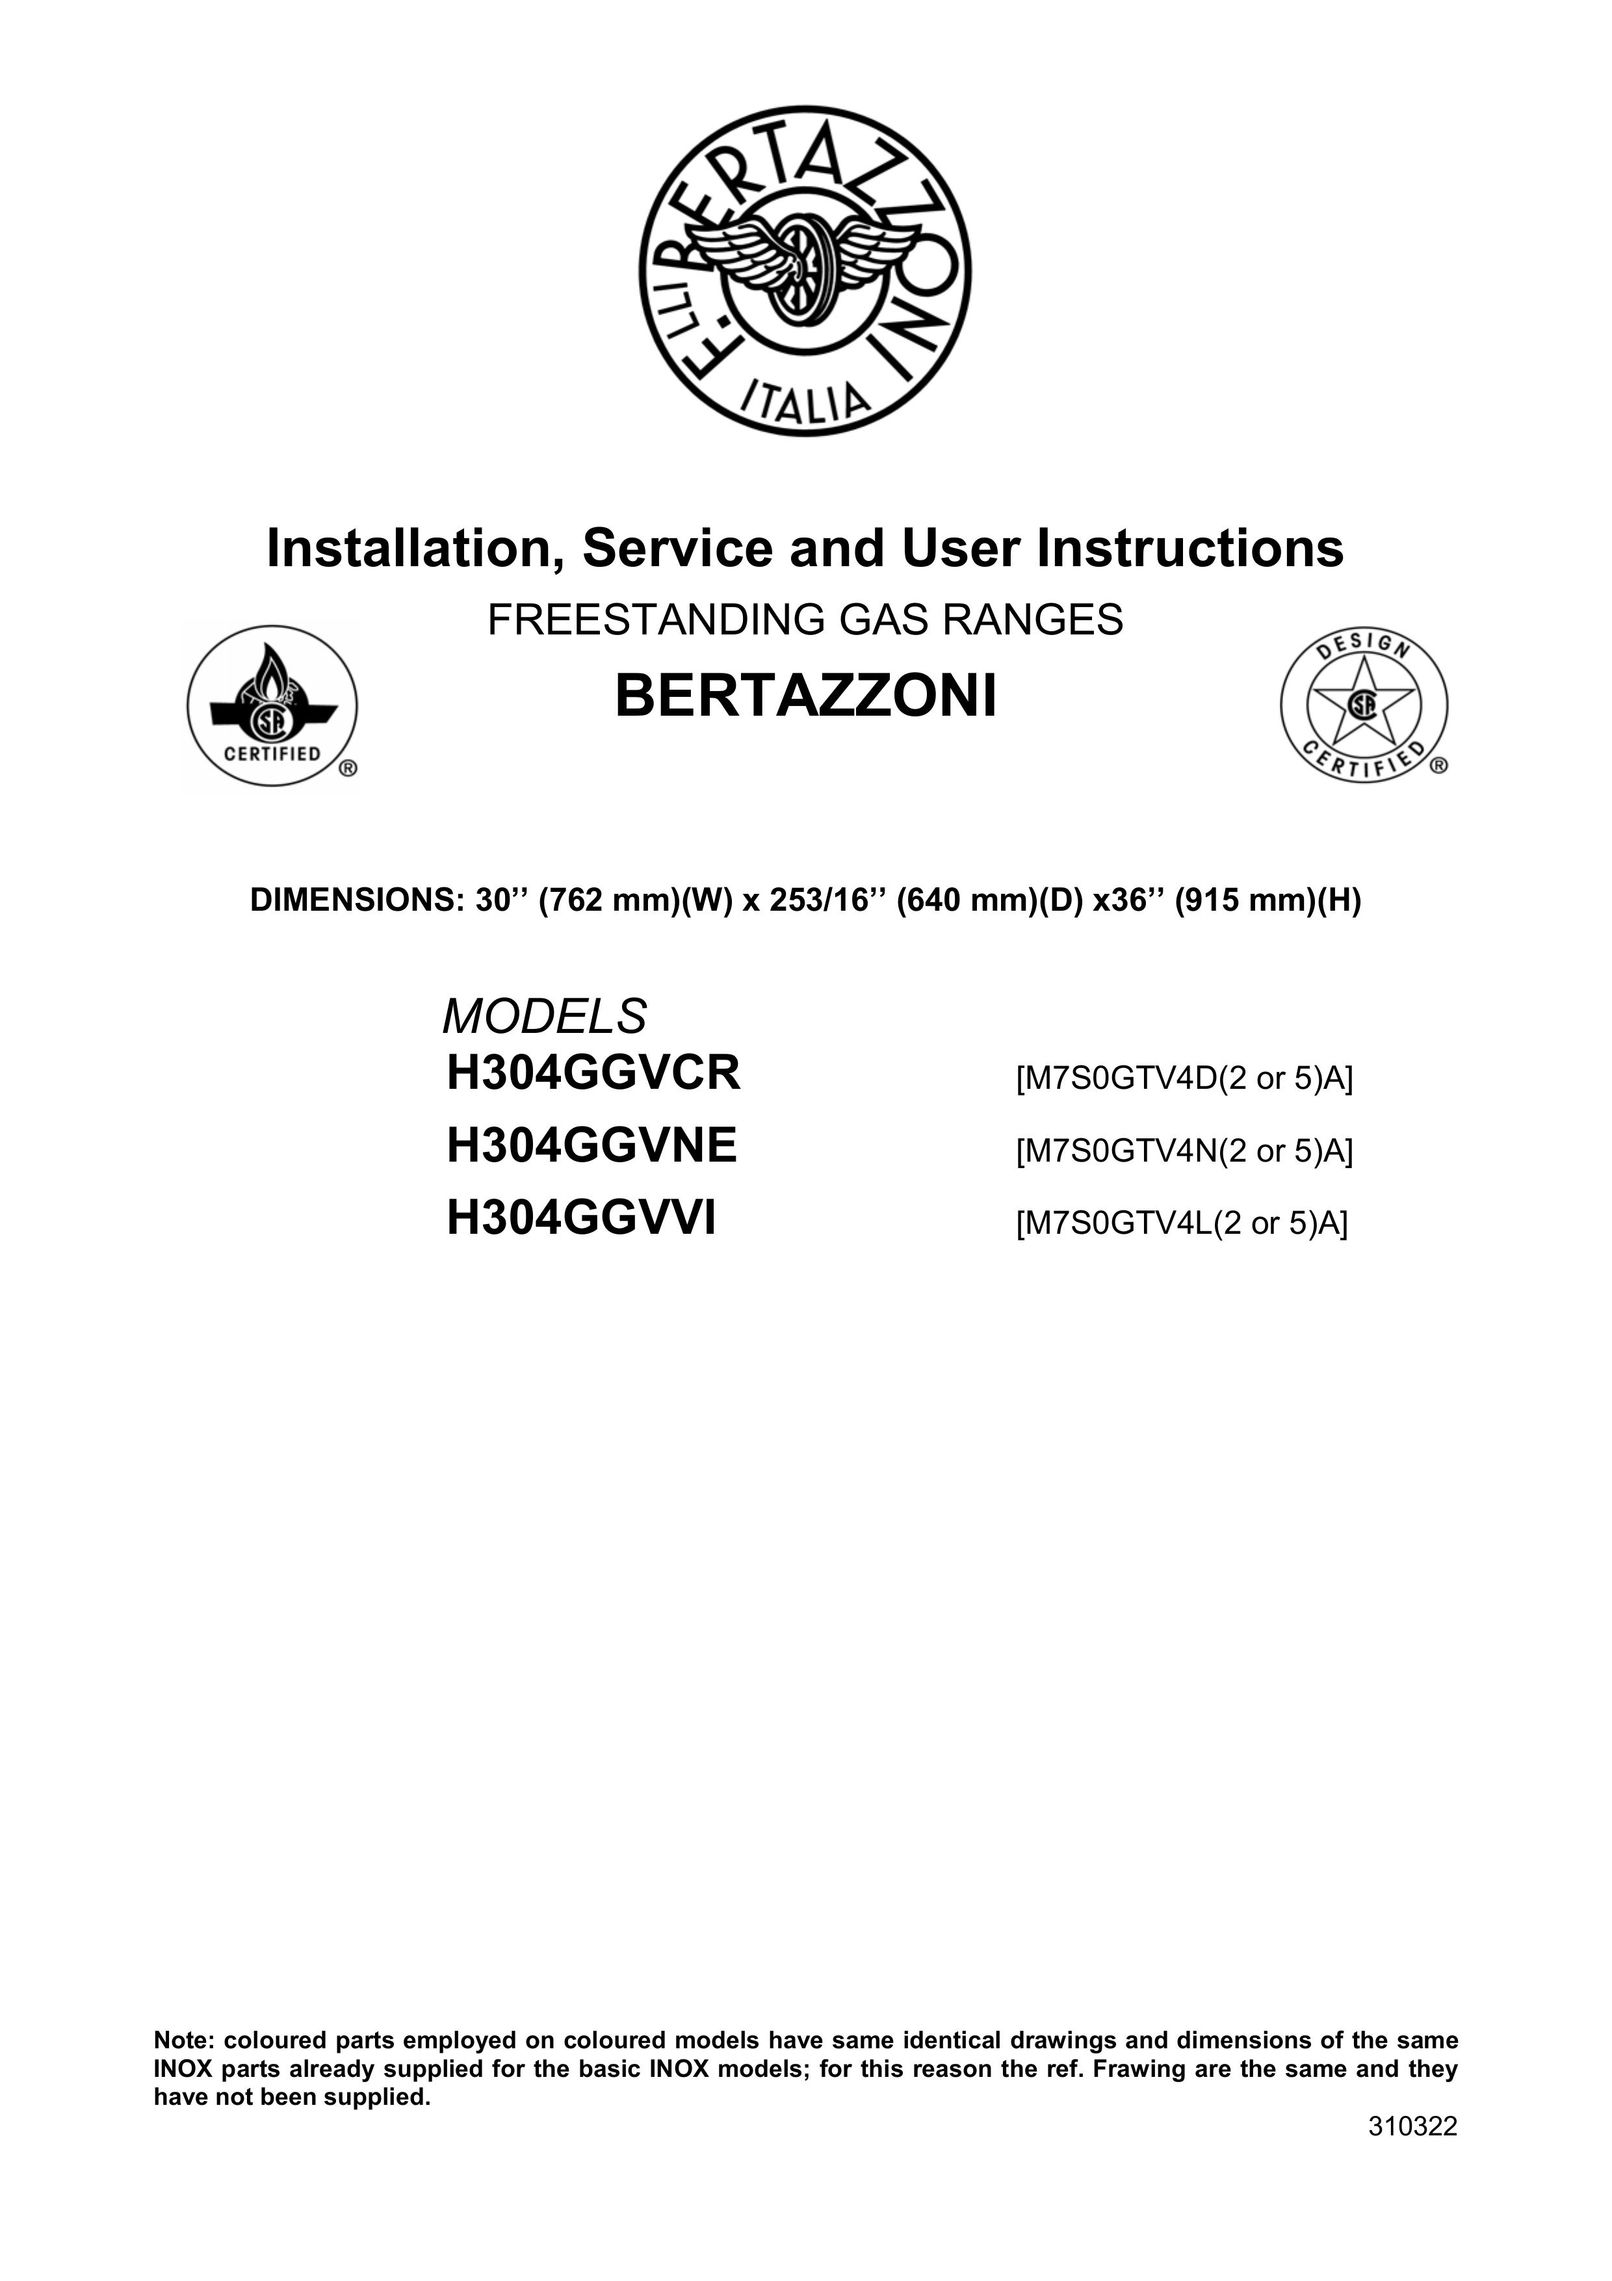 Bertazzoni H304GGVCR Range User Manual